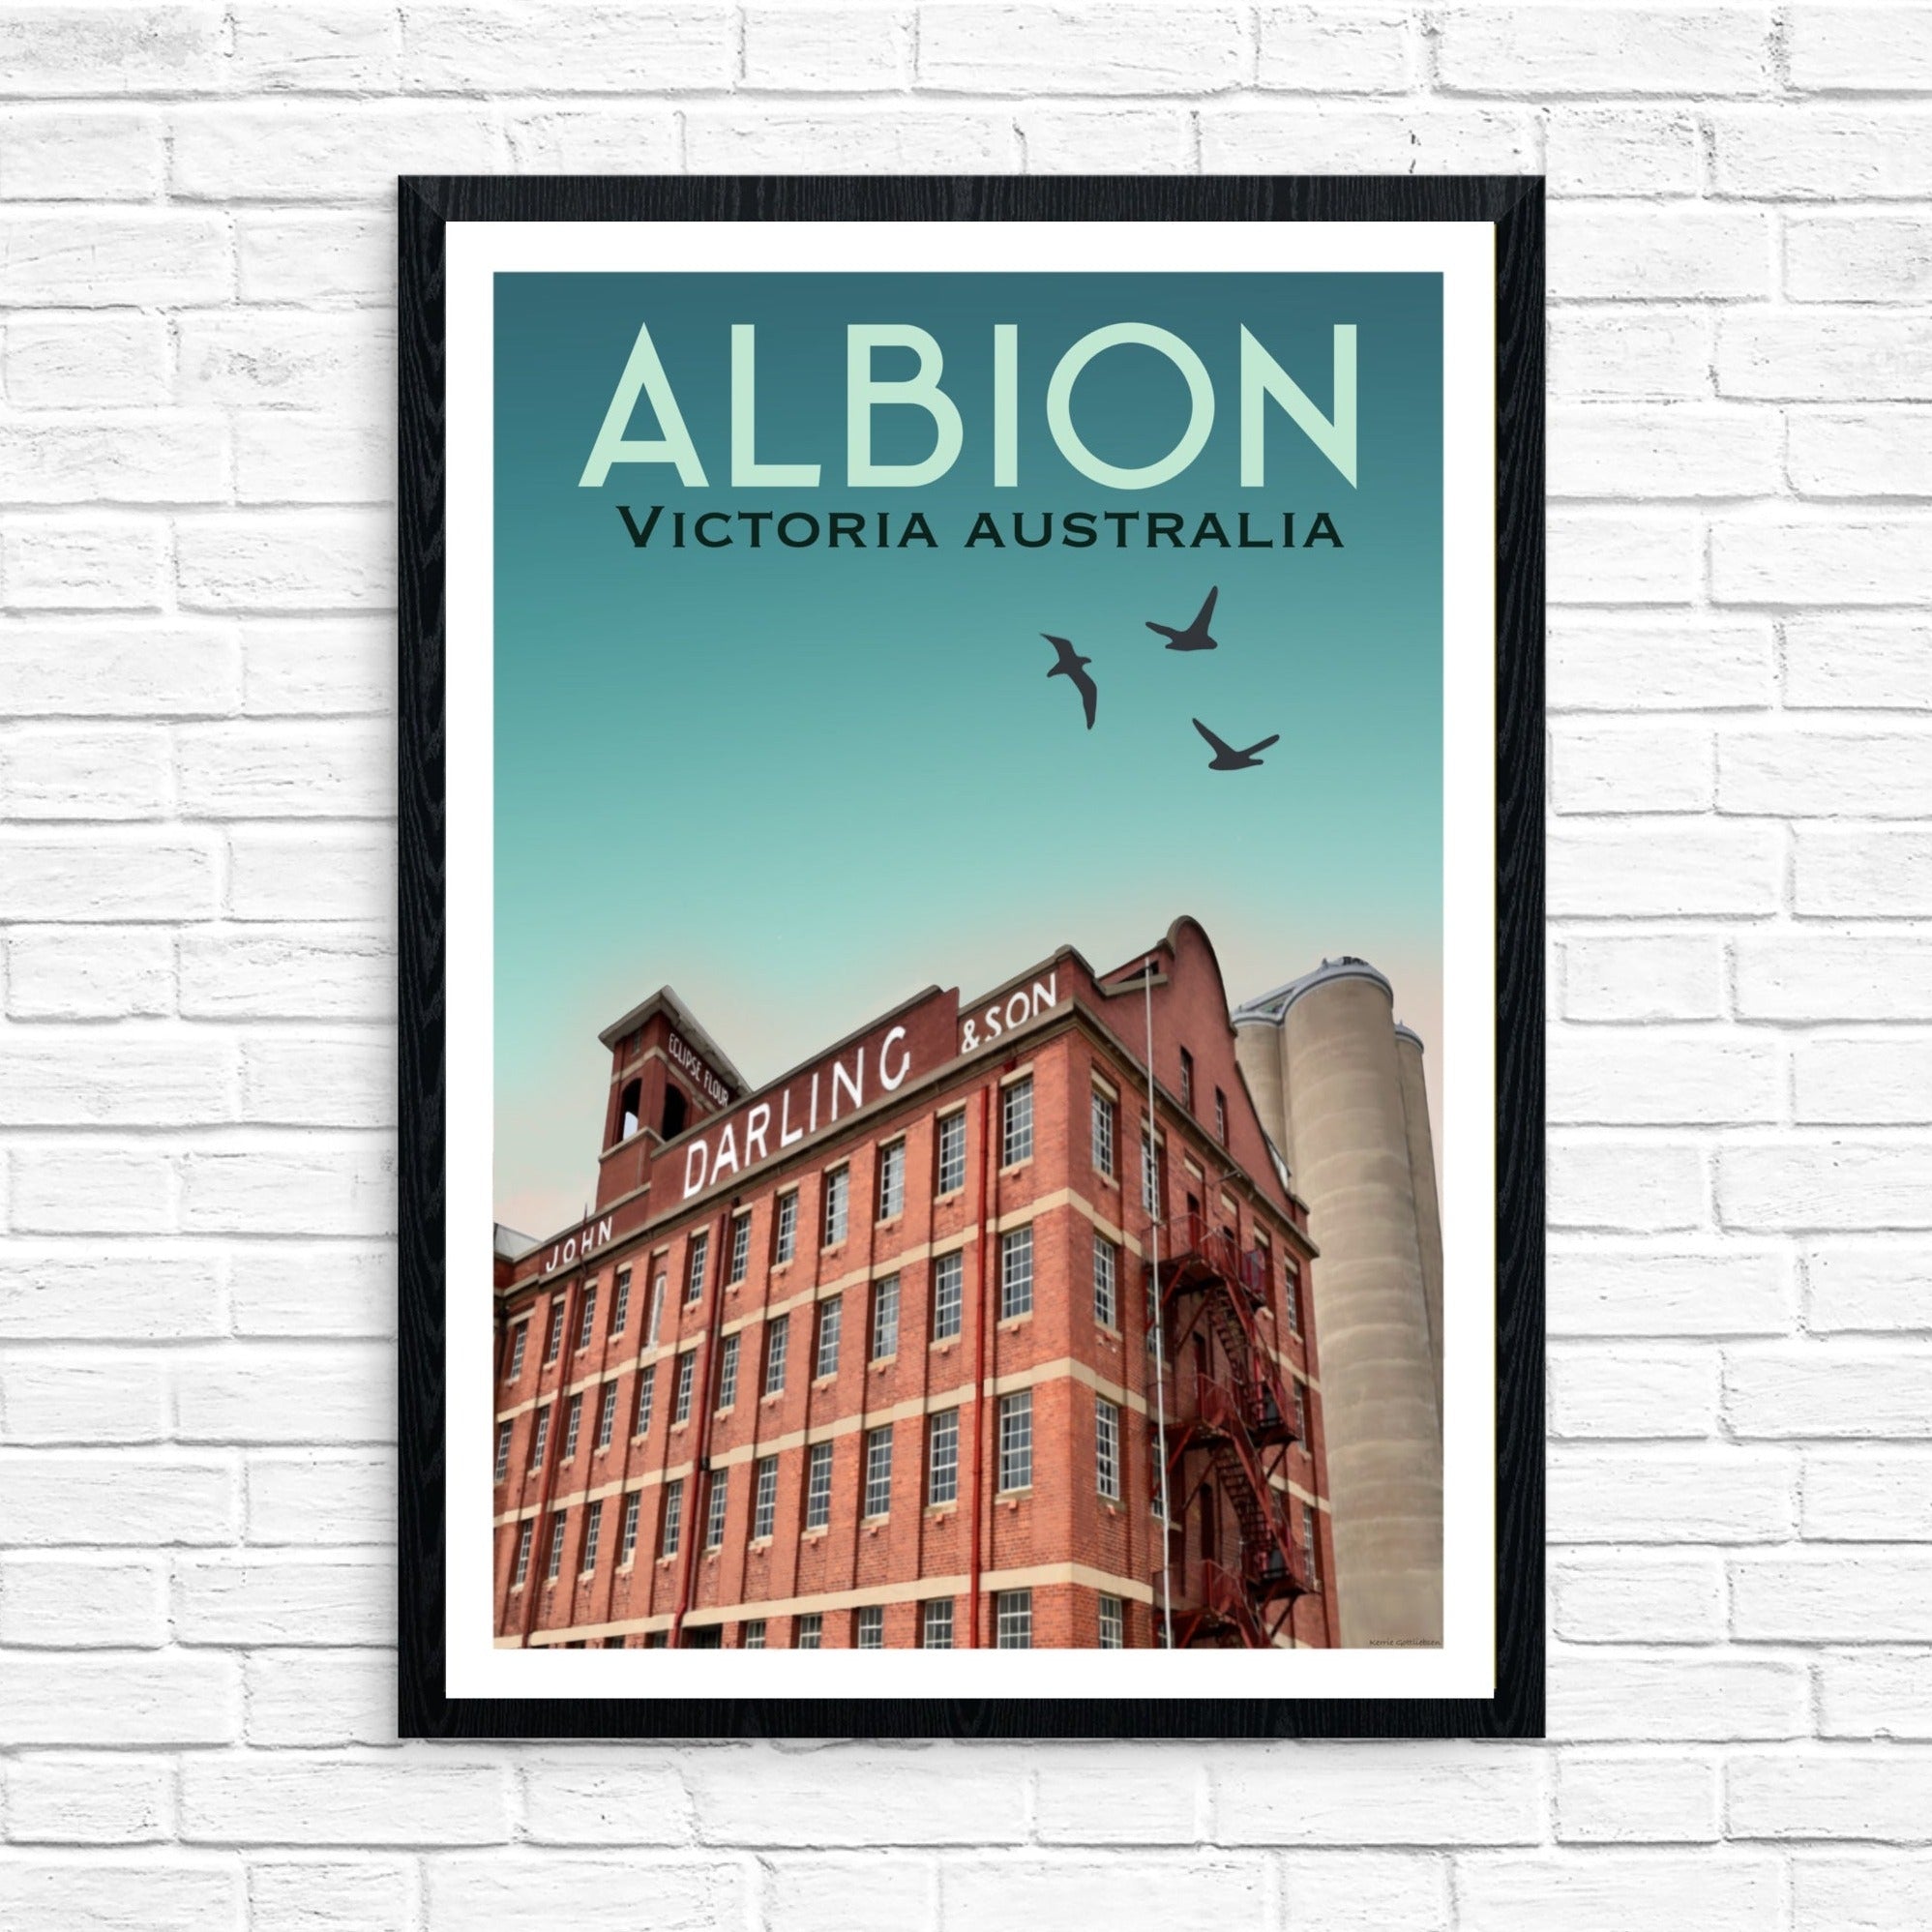 Vintage Poster - Albion John Darling Mill